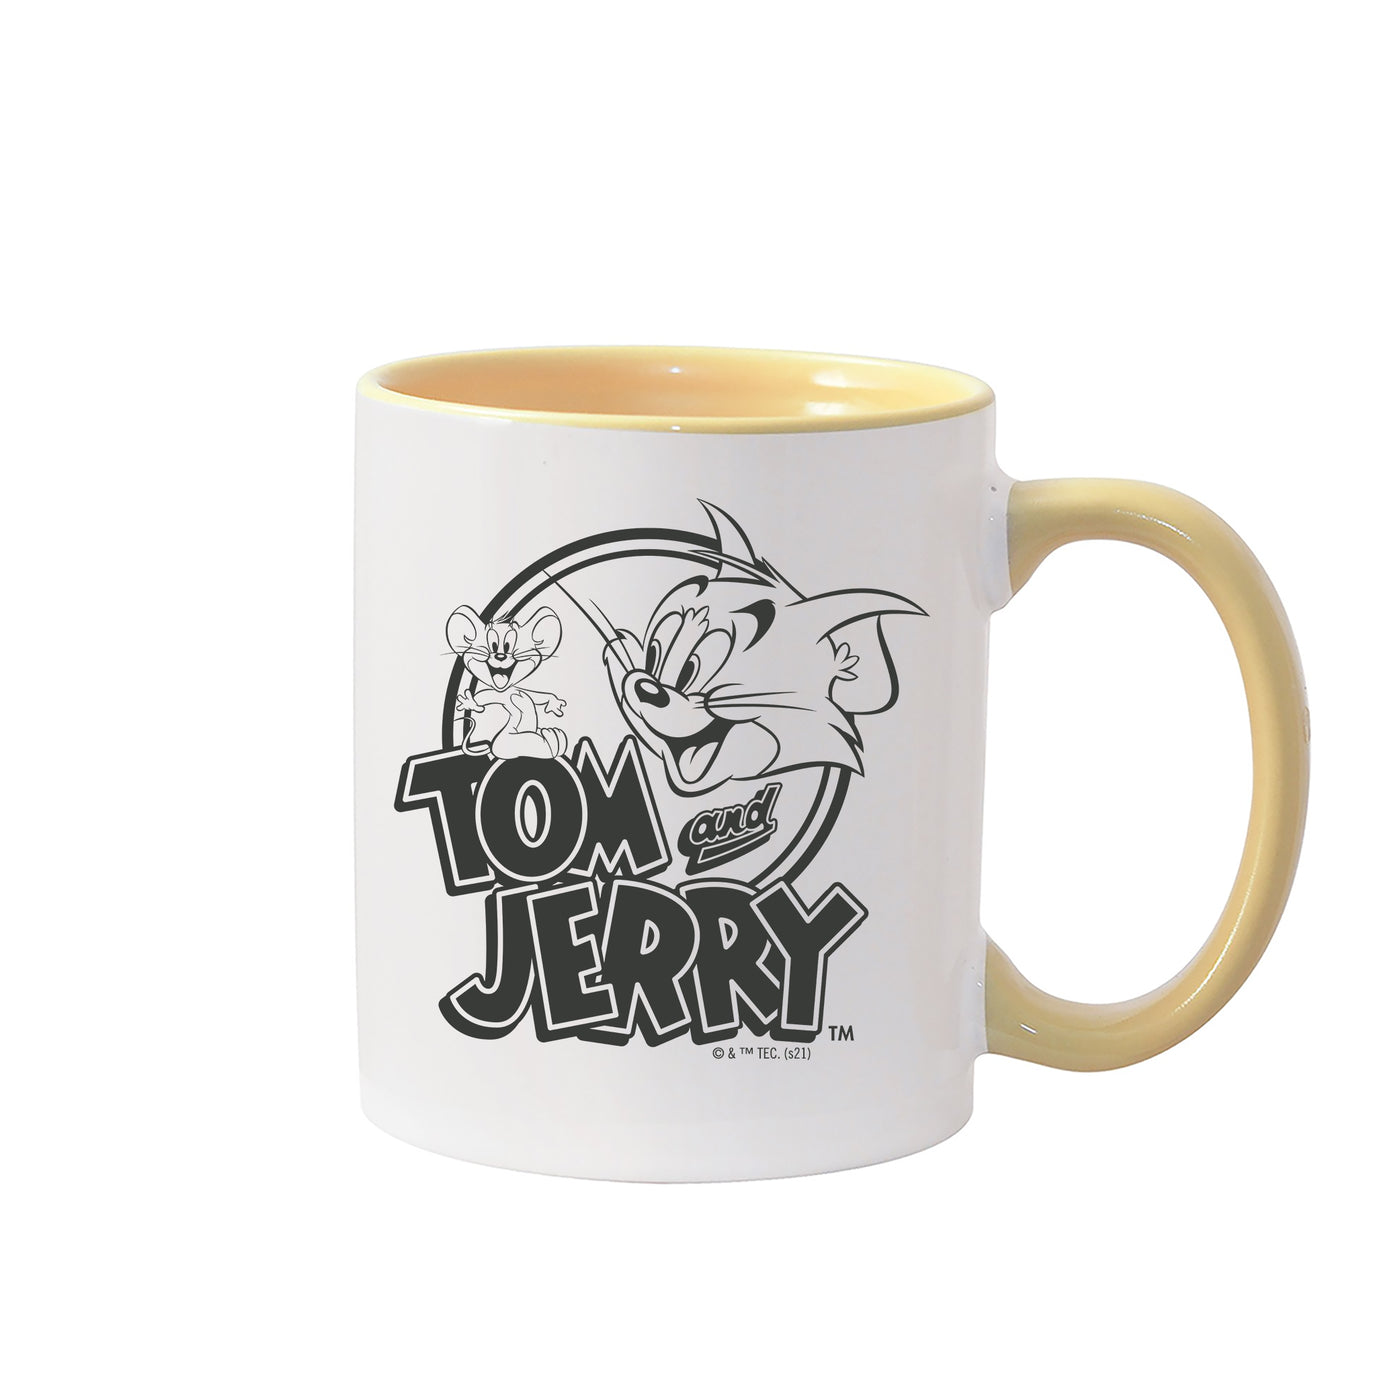 Tom and Jerry Happy! Two-Tone Mug